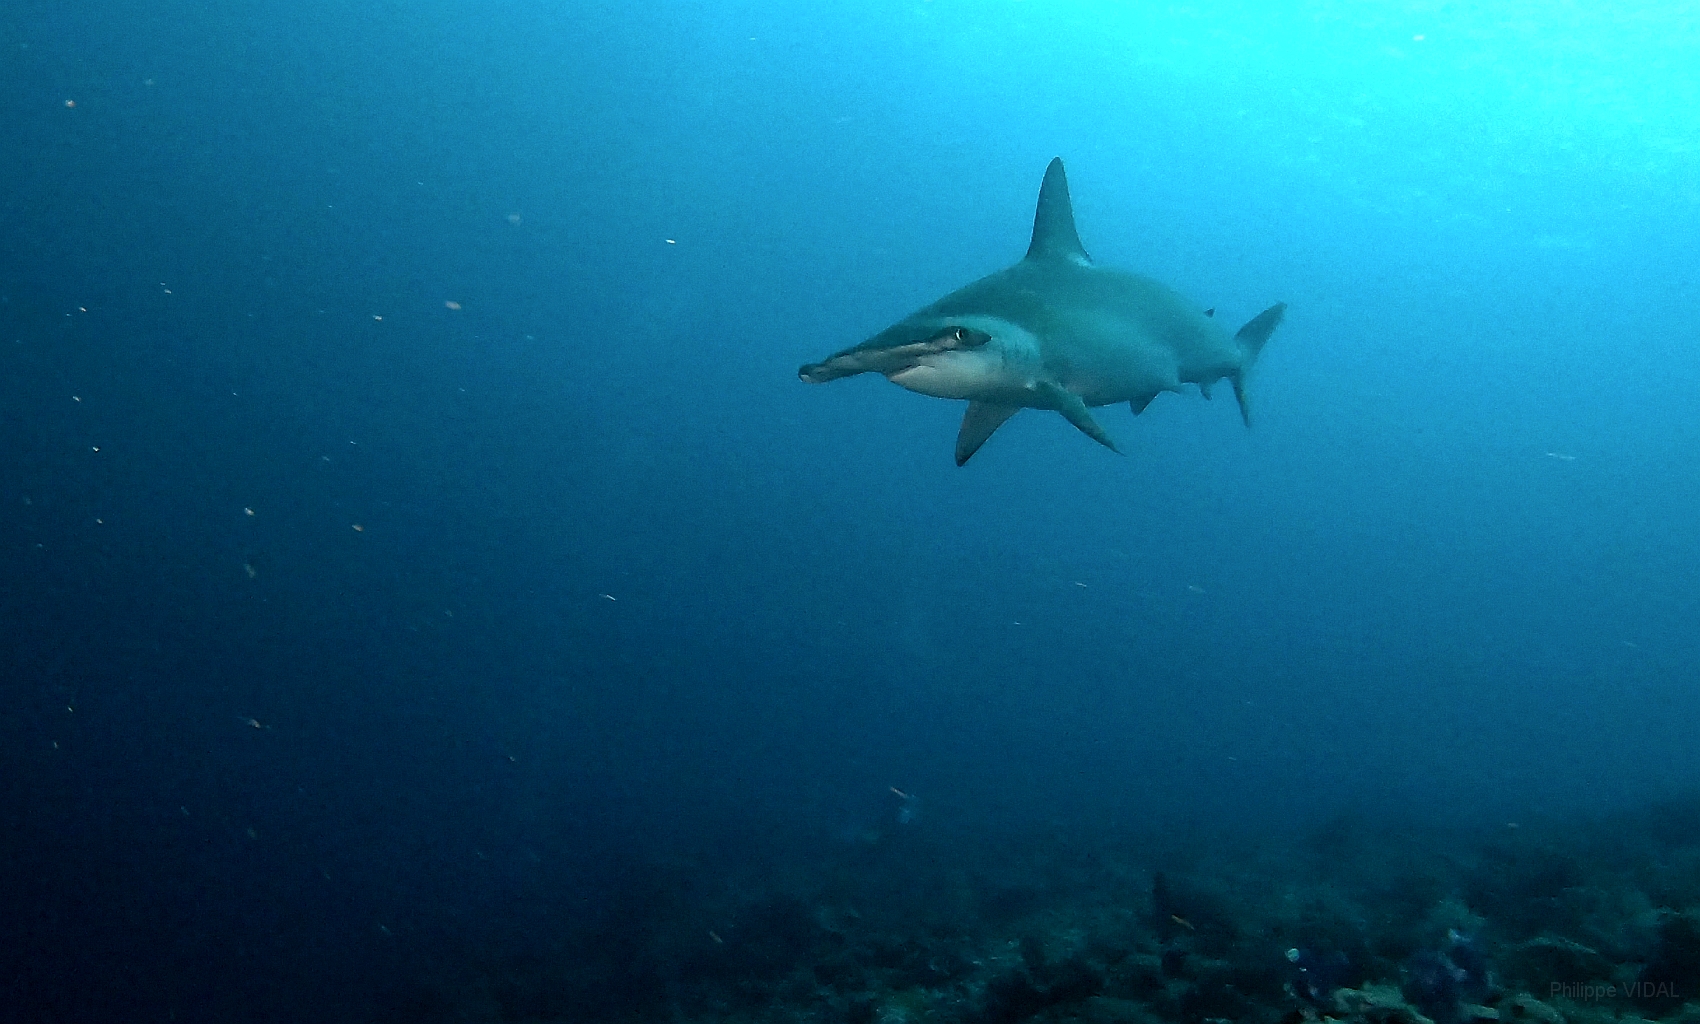 Banda Sea 2018 - 1 - Hammer Shark - Requin marteau.jpg